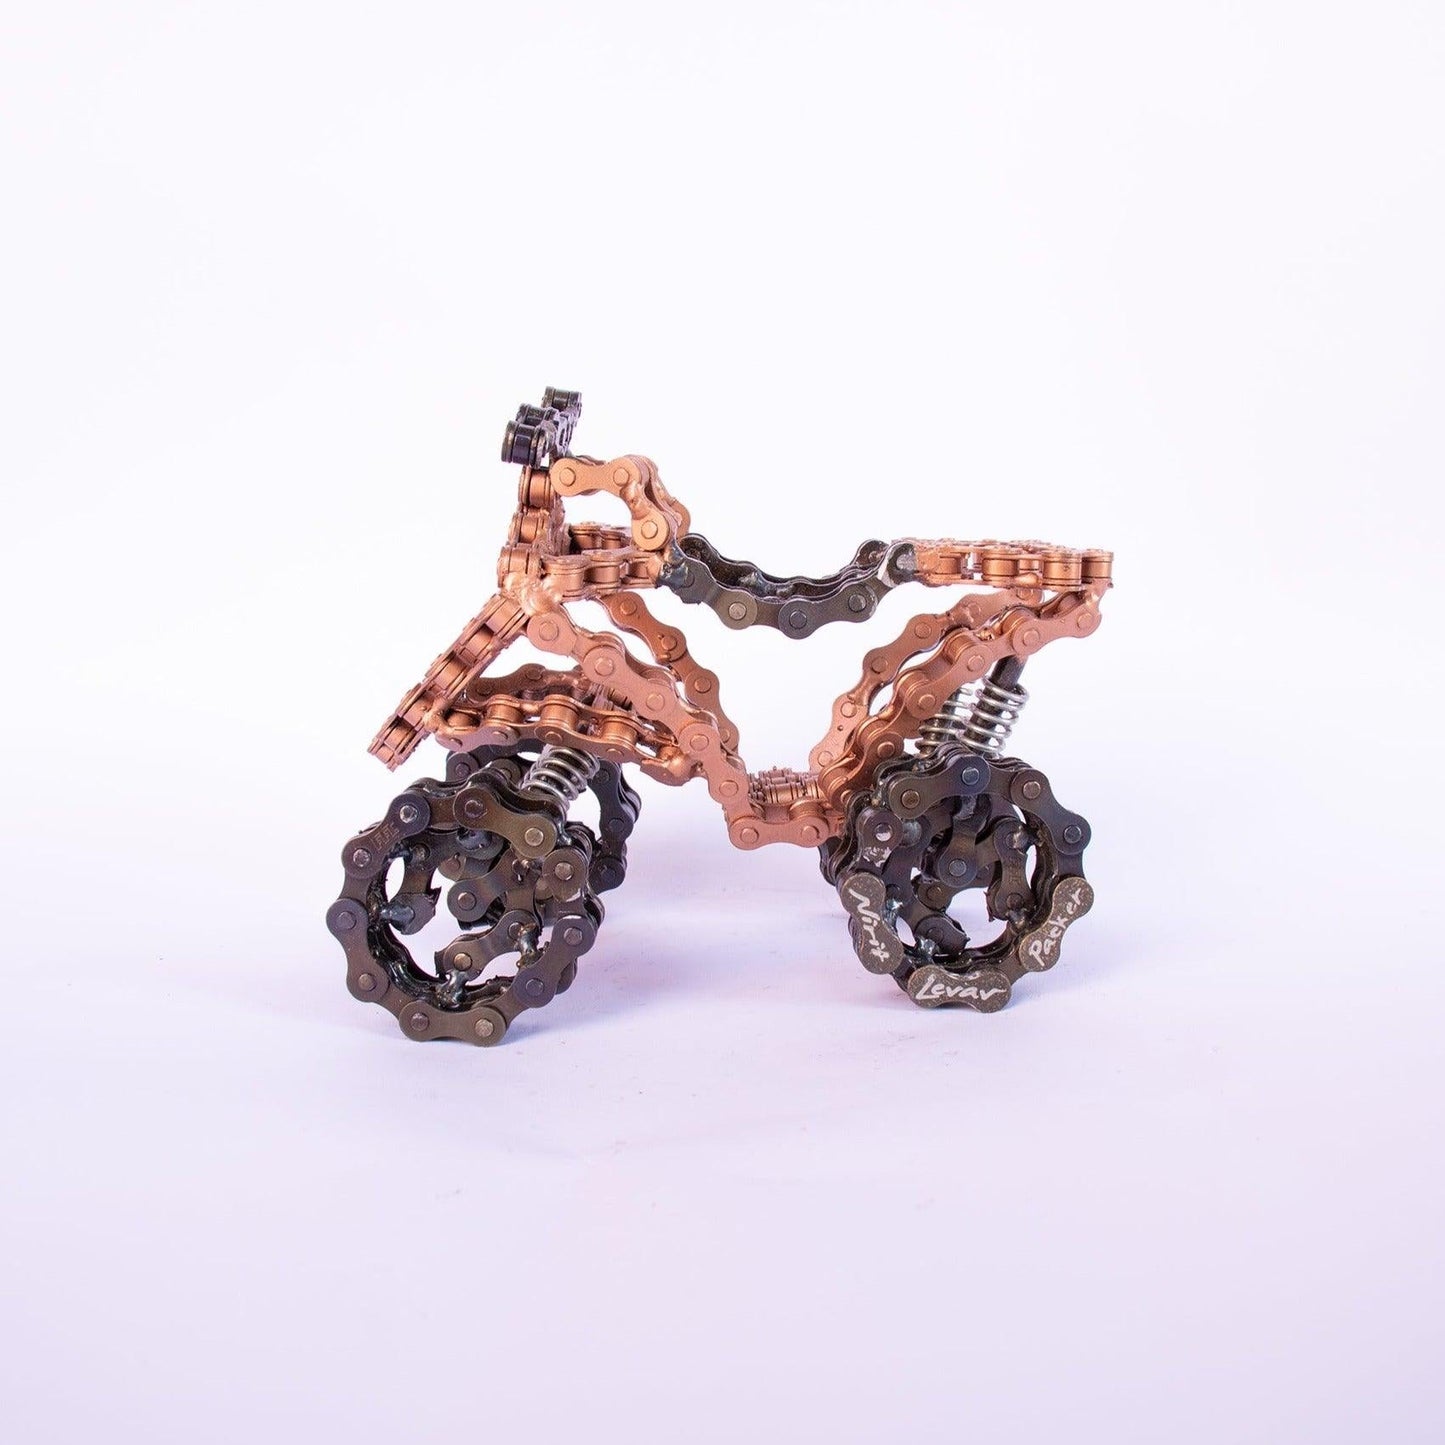 ATV Sculpture | UNCHAINED by NIRIT LEVAV PACKER